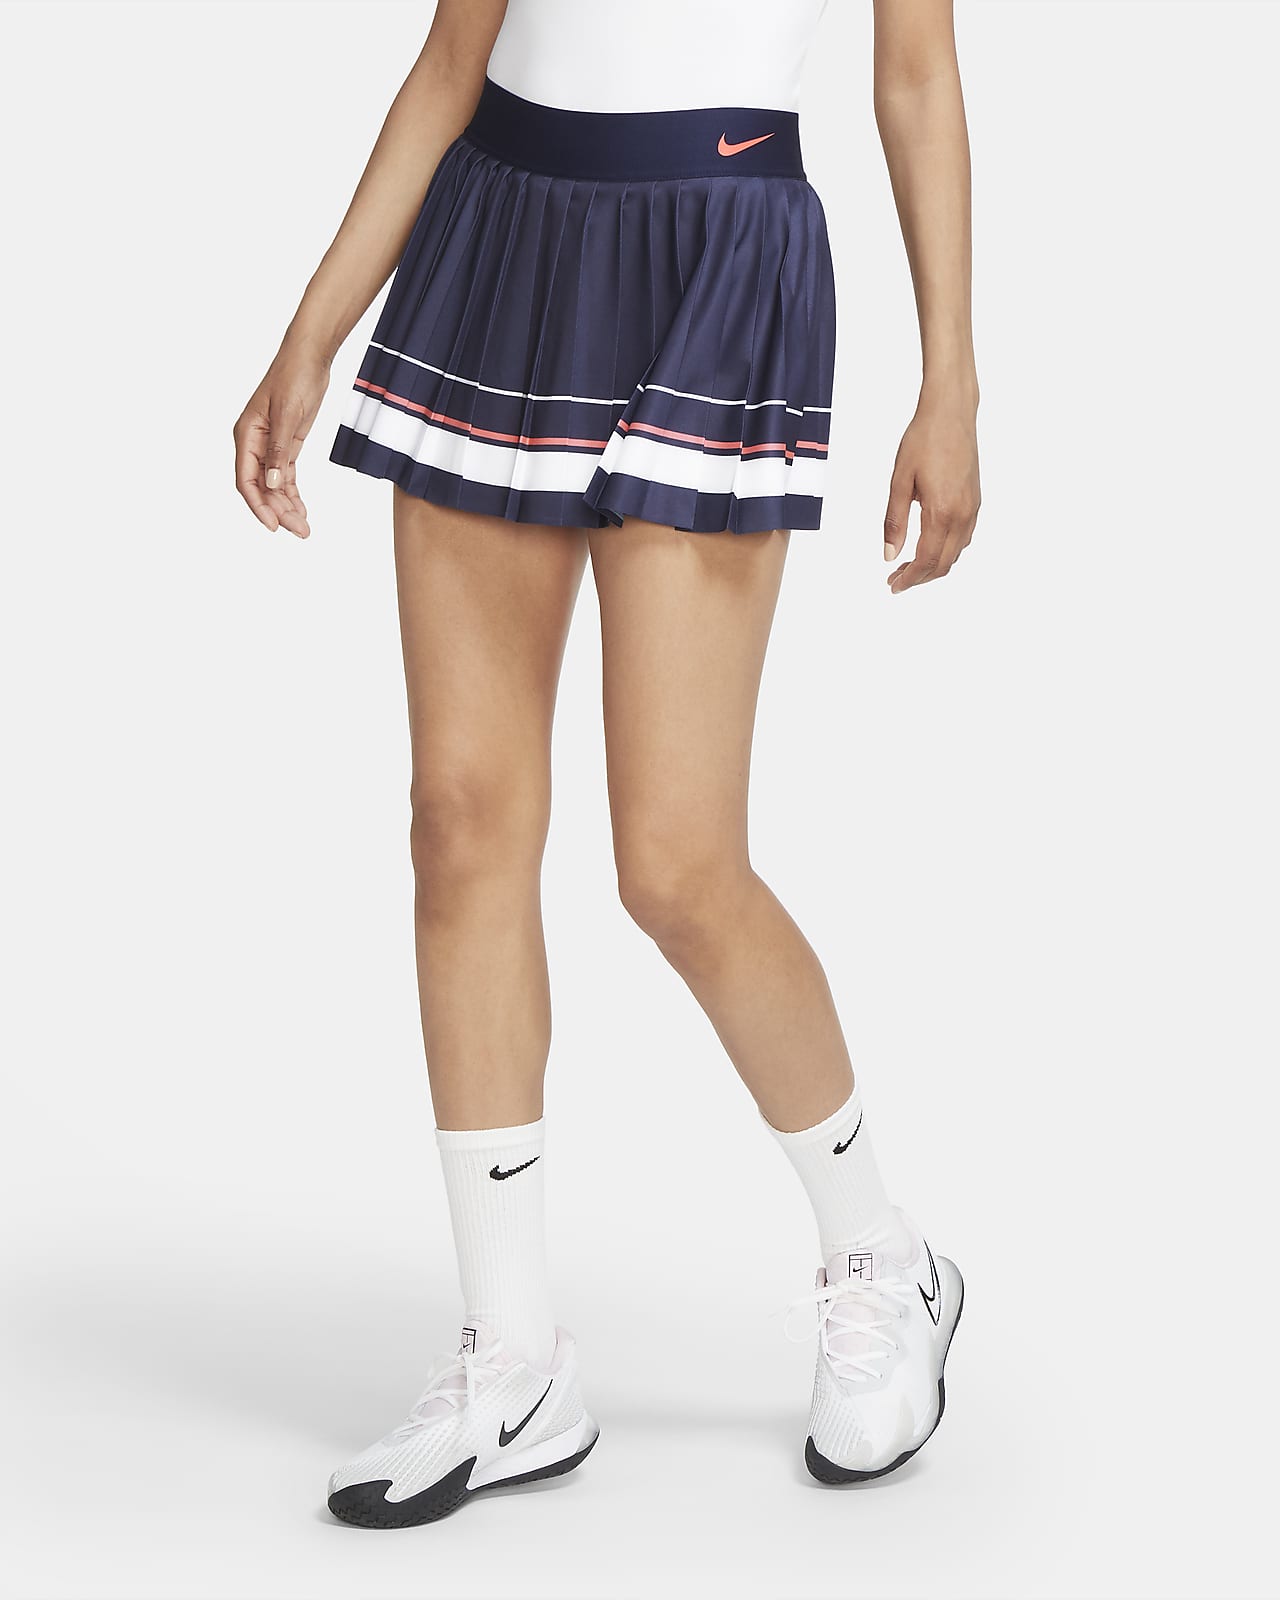 Maria Women's Tennis Skirt. Nike LU